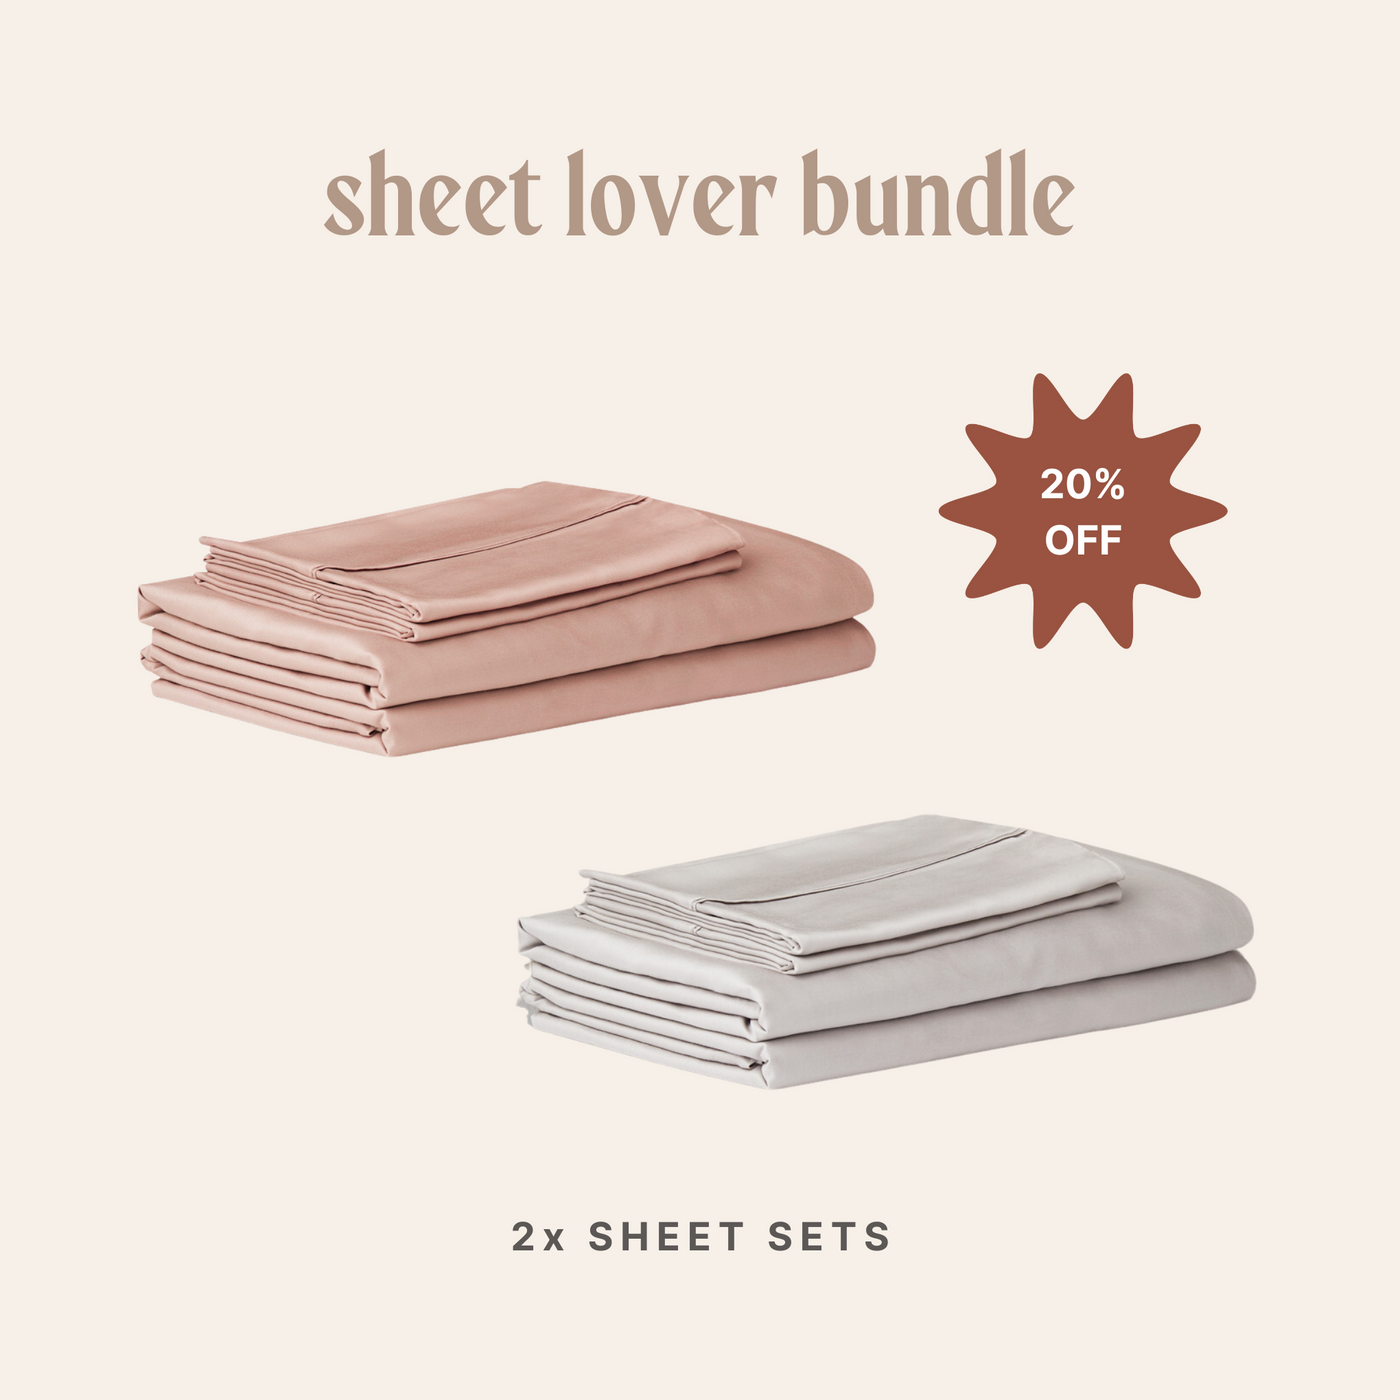 Sheet Lover Bundle